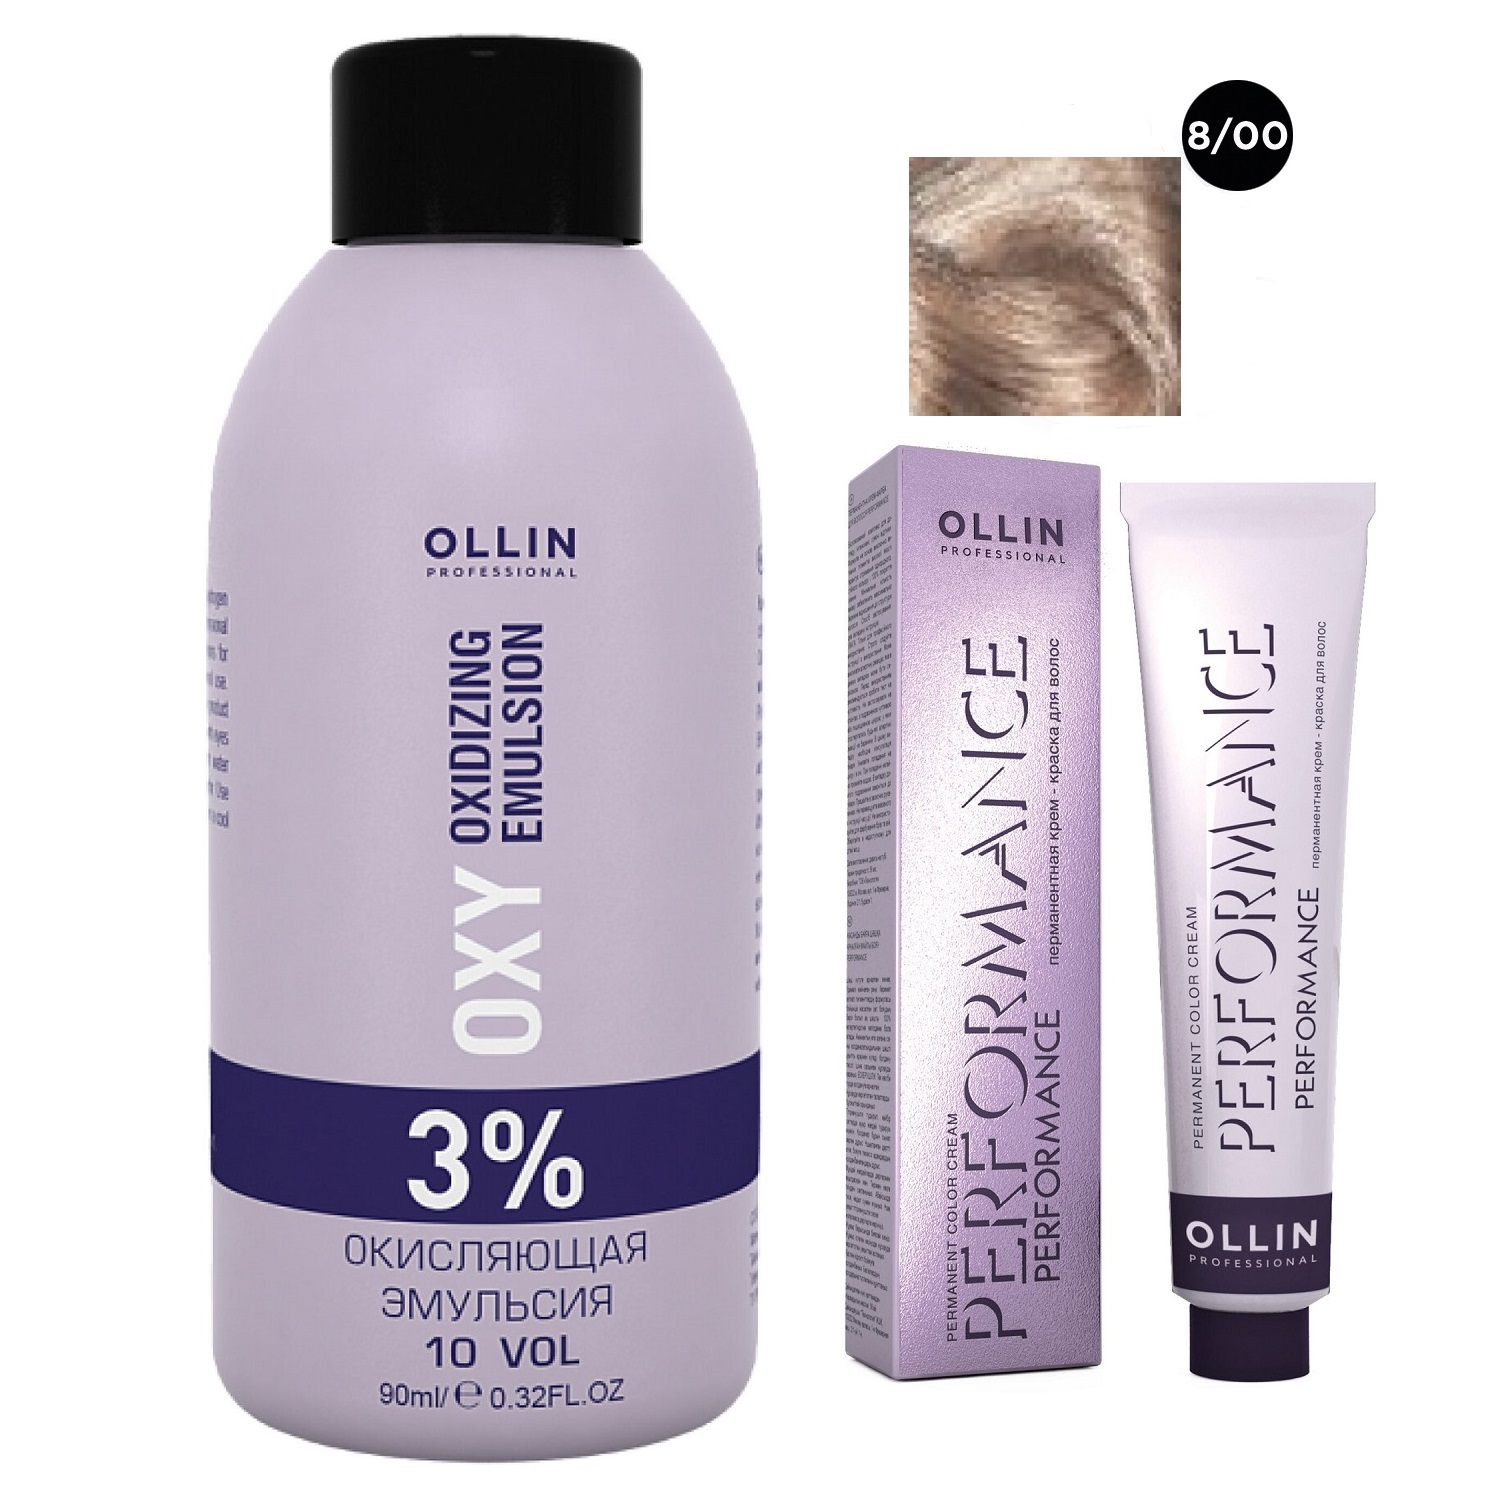 ollin performance oxy мини 3% 10vol окисляющая эмульсия 90 мл Ollin Professional Набор Перманентная крем-краска для волос Ollin Performance оттенок 8/00 светло-русый глубокий 60 мл + Окисляющая эмульсия Oxy 3% 90 мл (Ollin Professional, Performance)